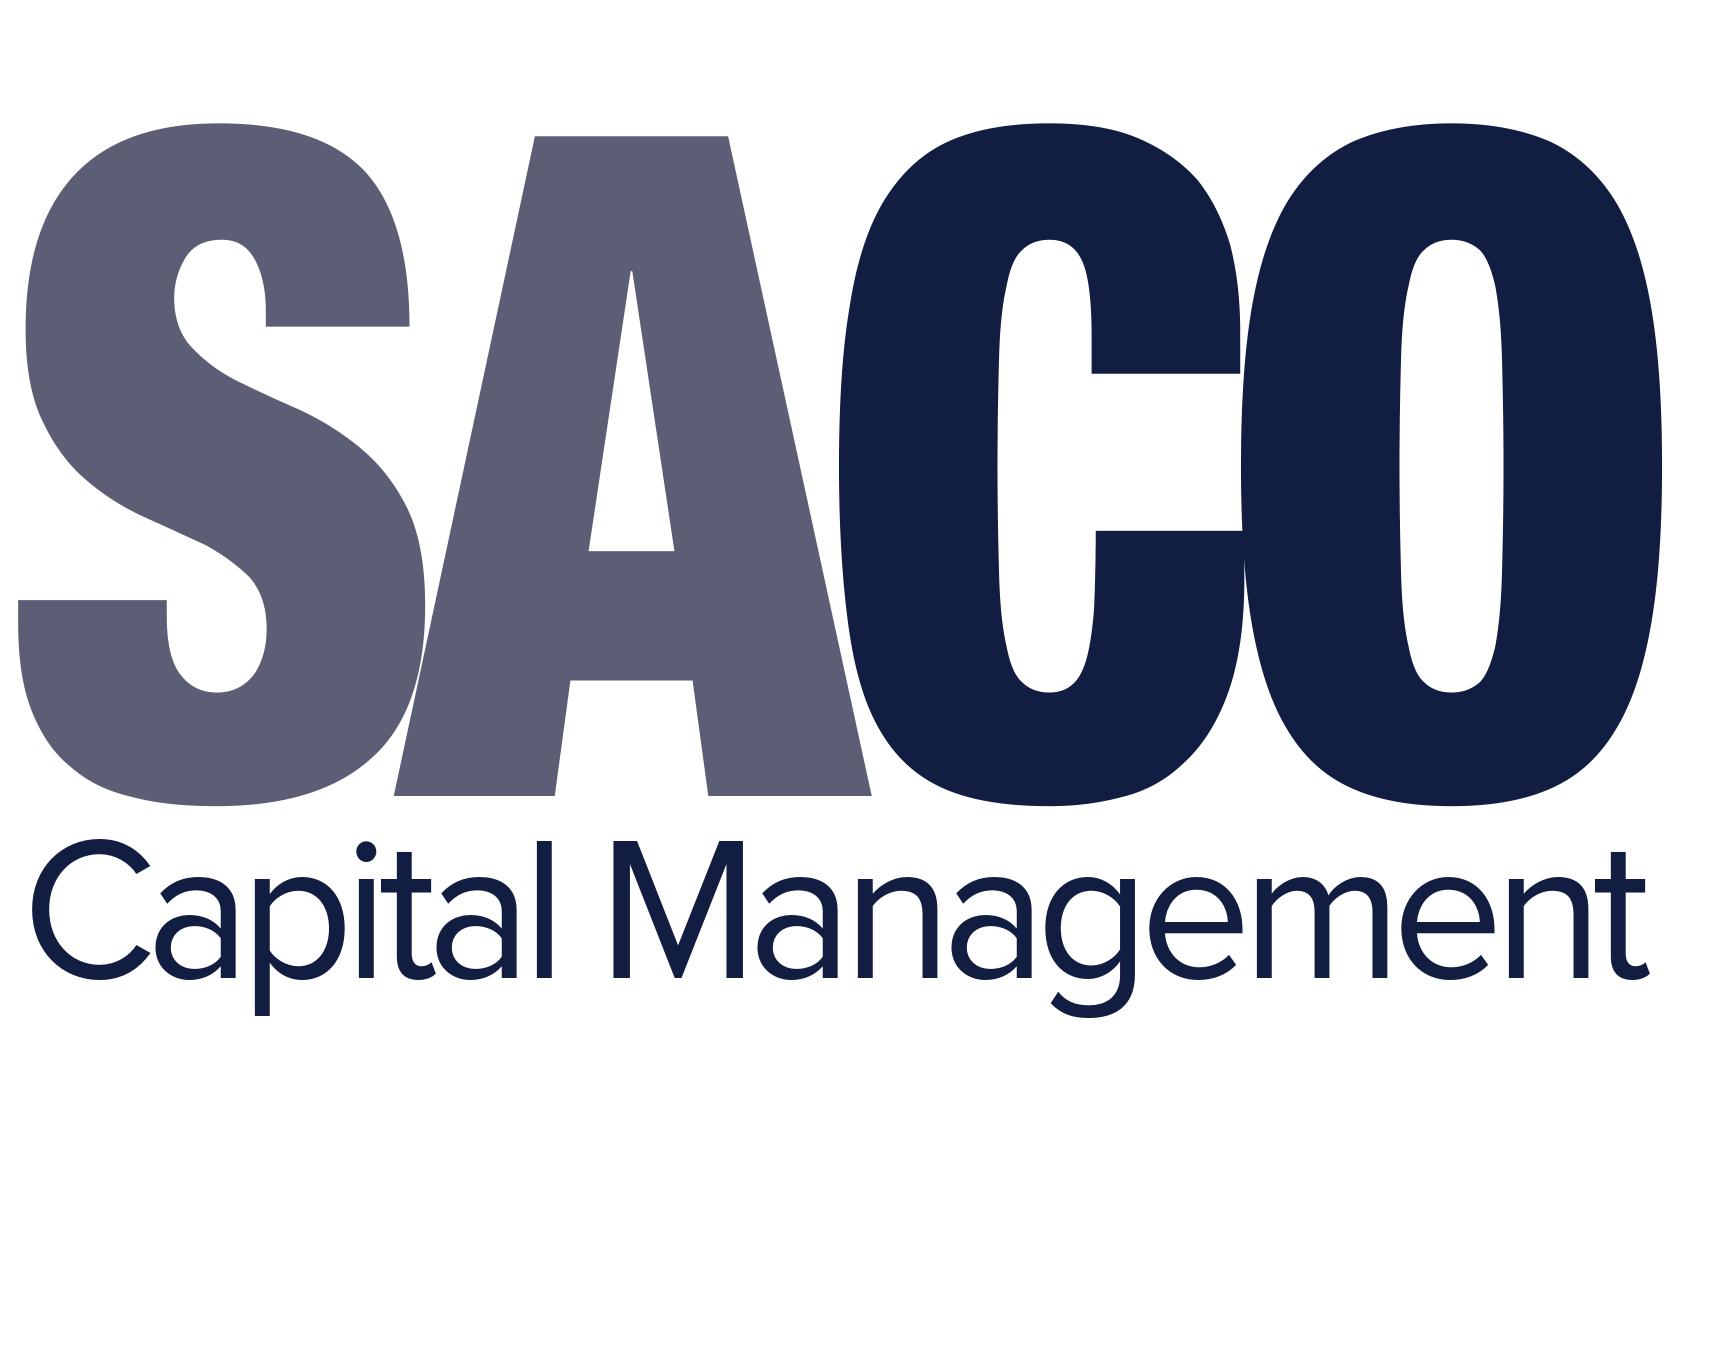 Saco Capital